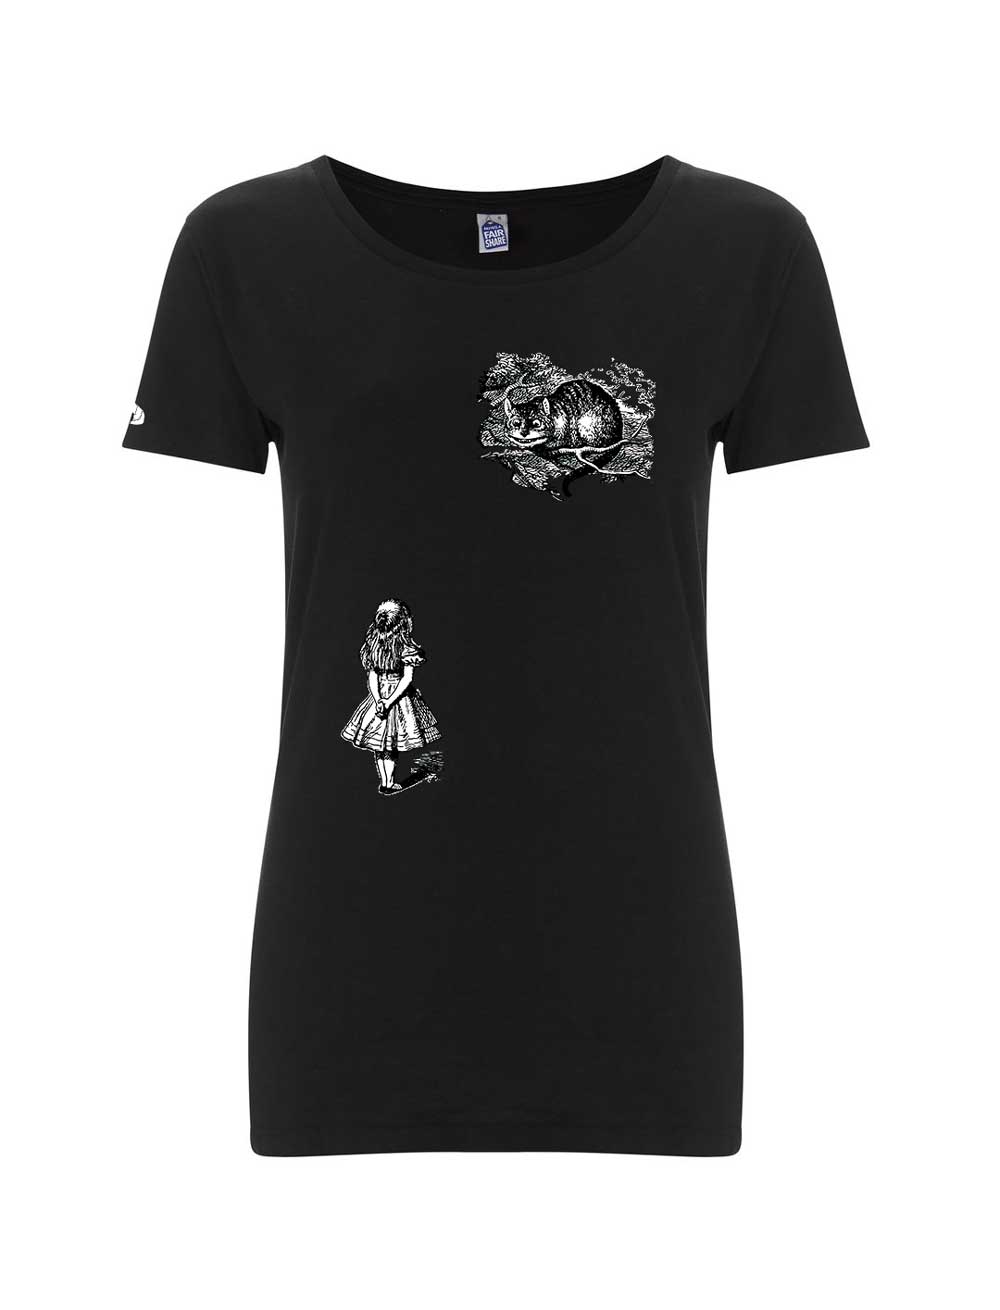 Women's Fairtrade Cheshire Cat T-shirt